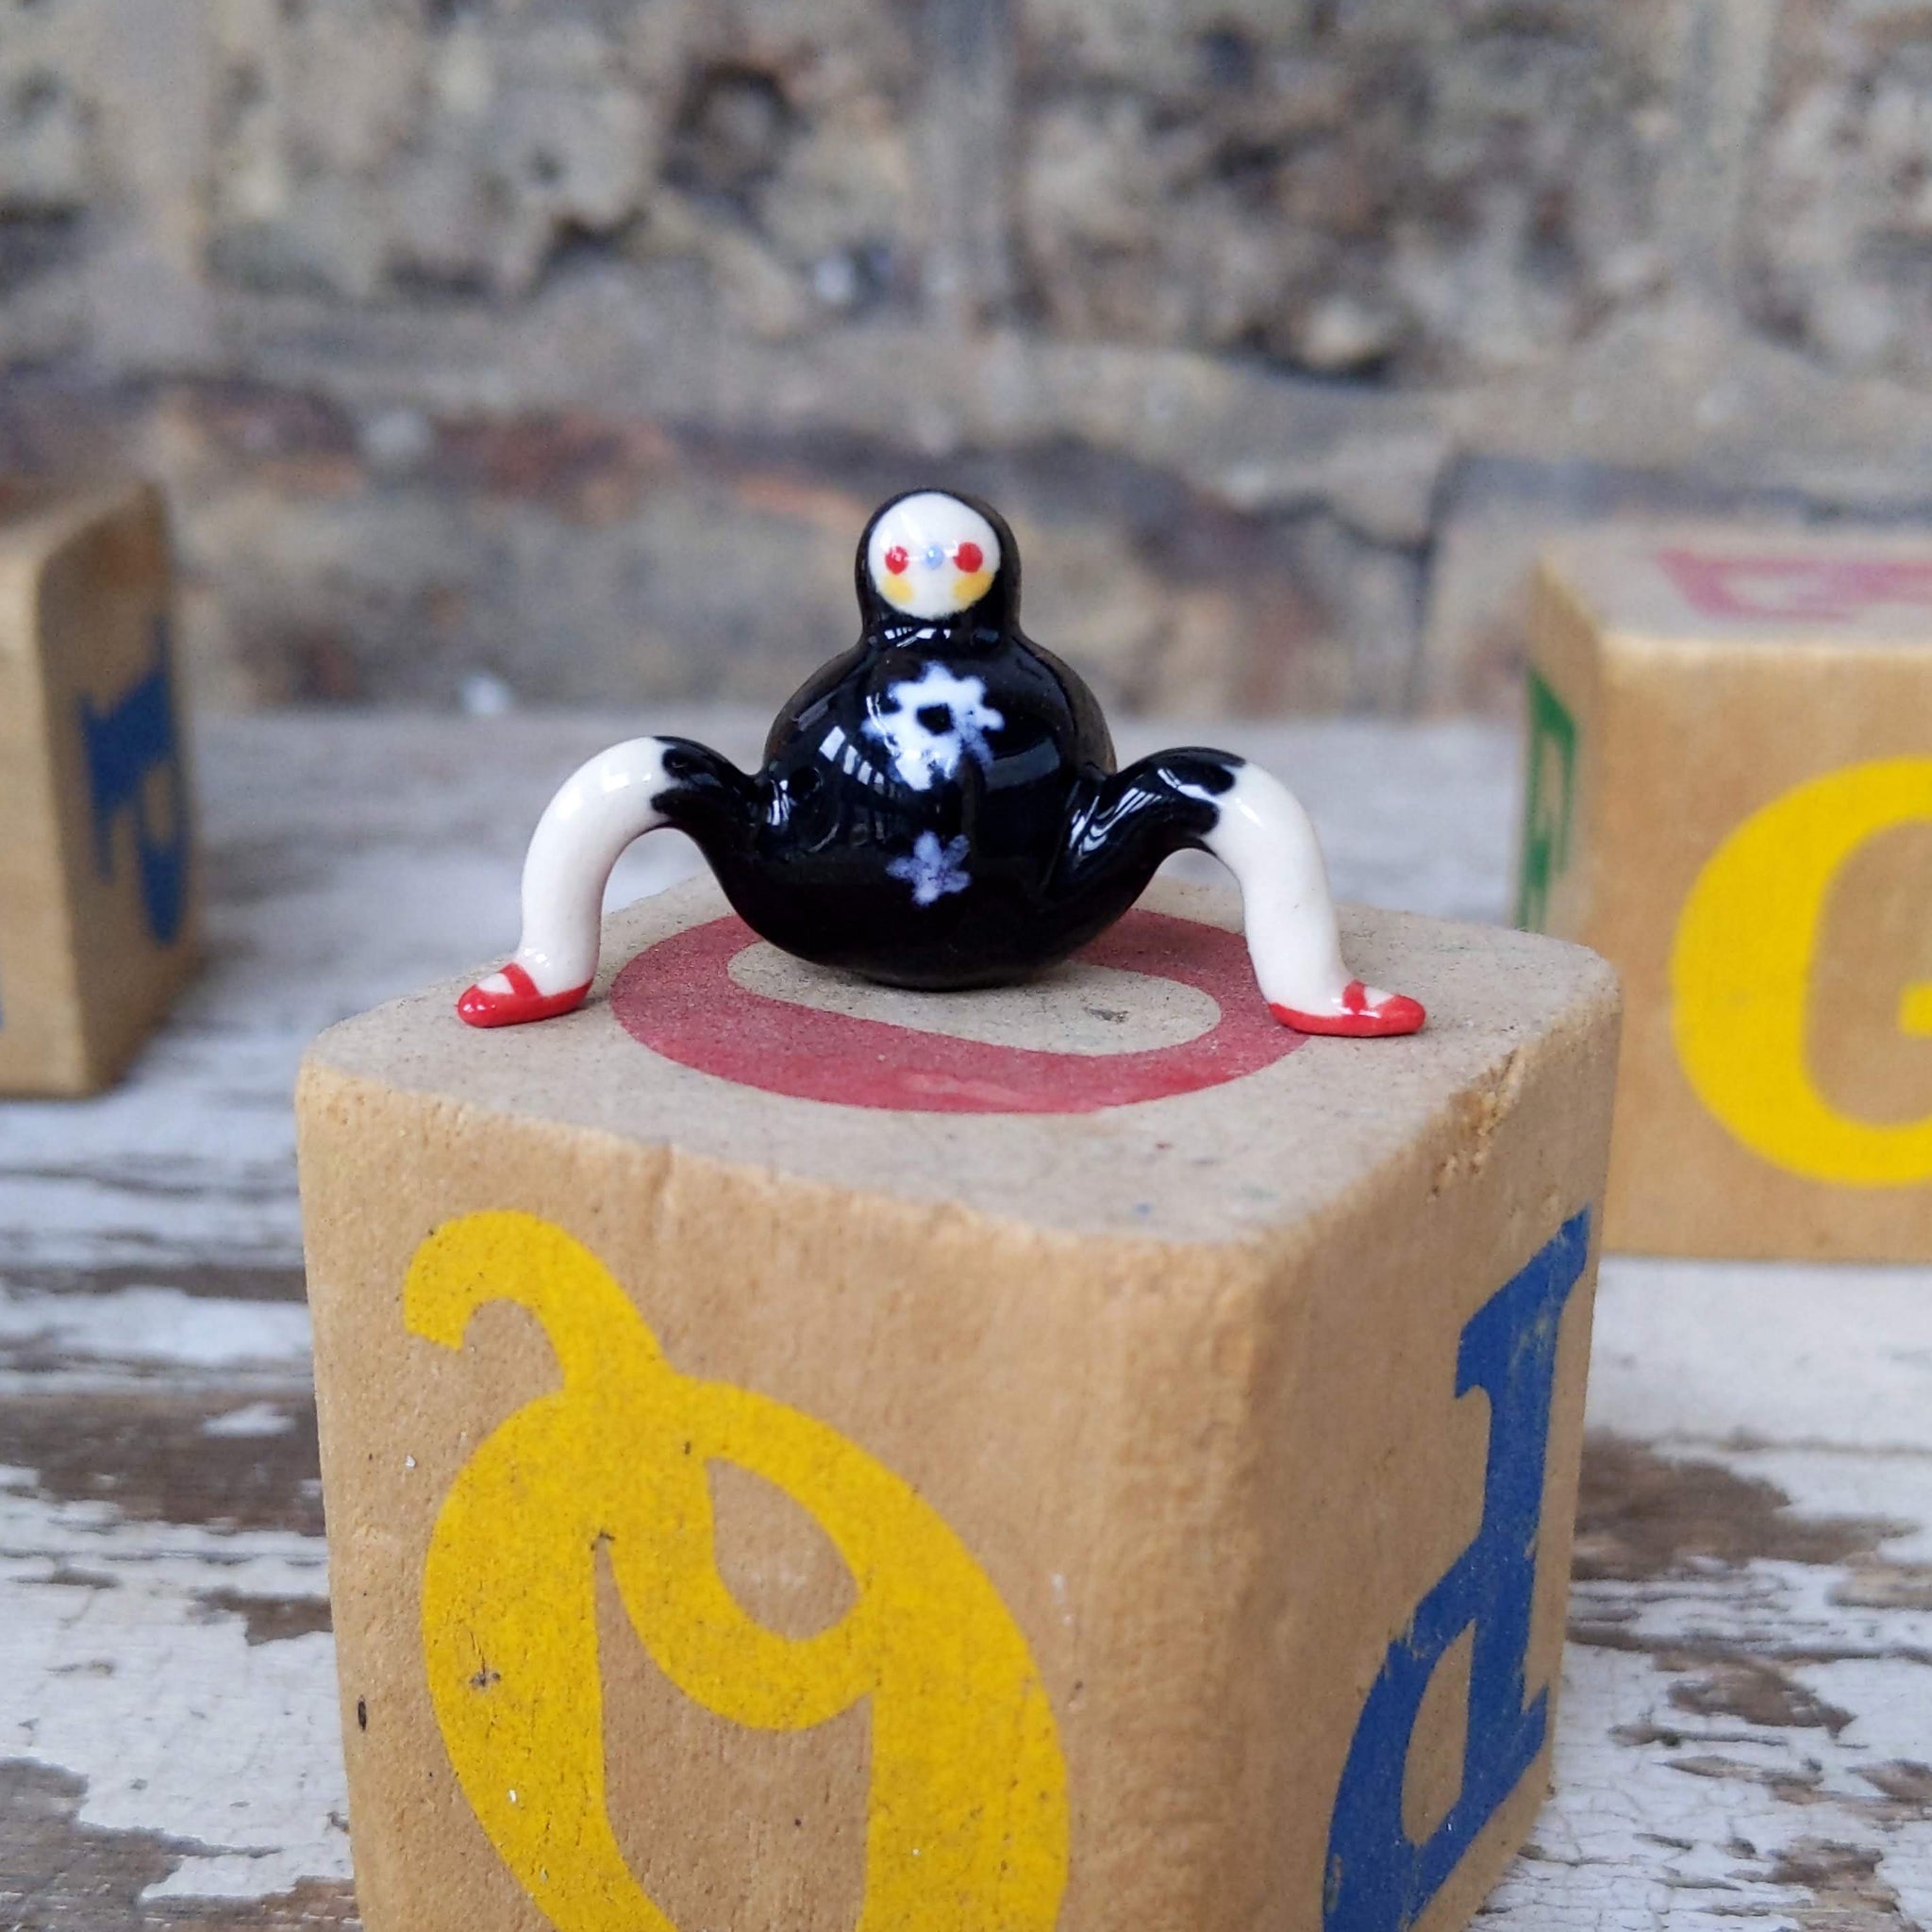 Tinybirdman Ceramic Art Toy [Special Fashion #6: Lacey Daisy Jumper]